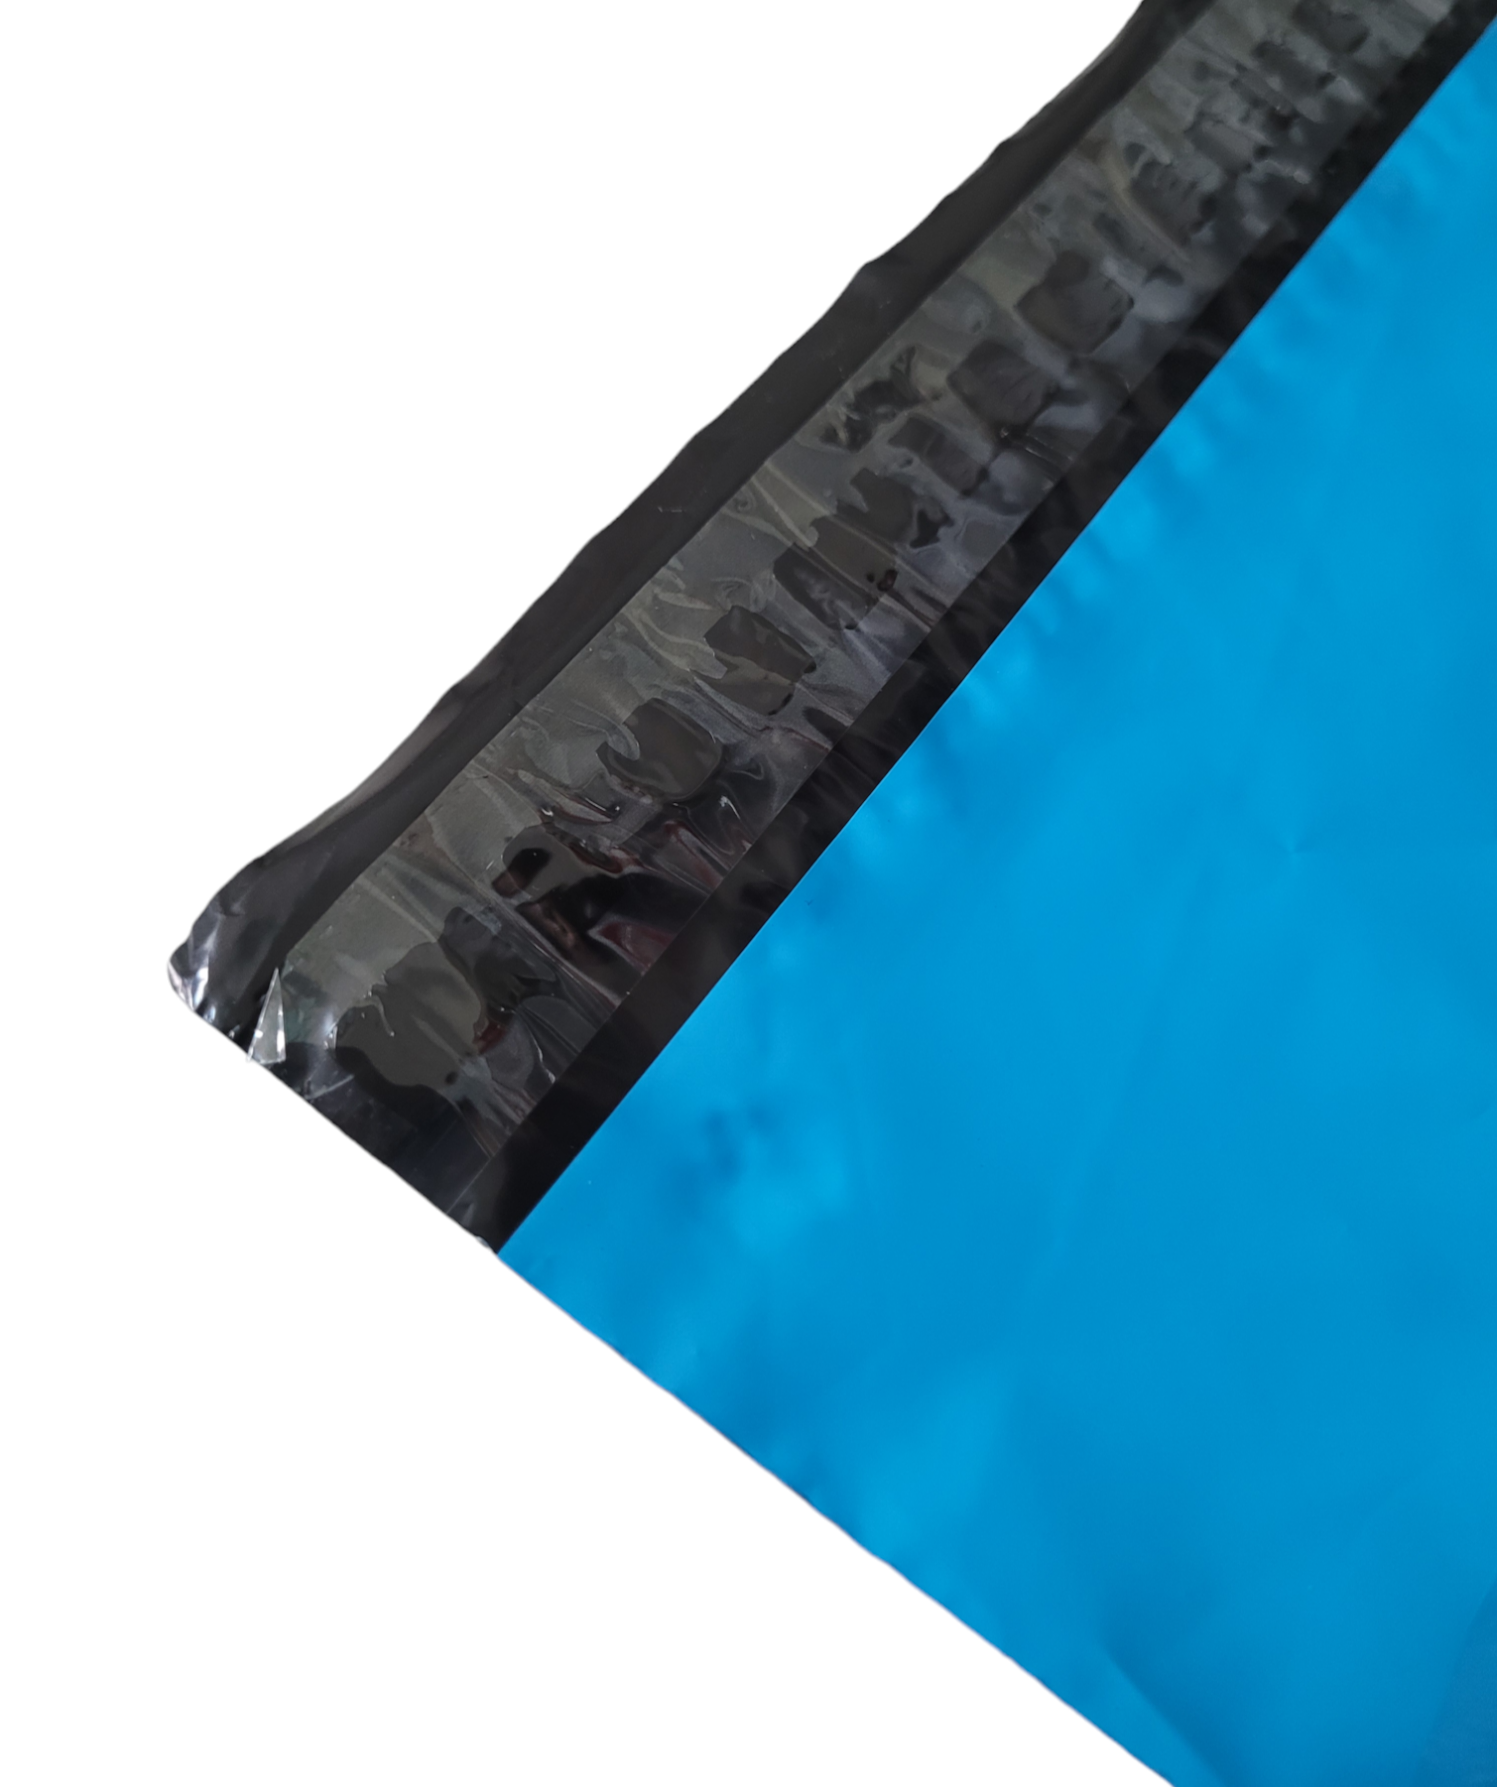 Bolsa De Seguridad Biodegradable Portaguia 29x38cm x 100 Unds Diferentes Colores